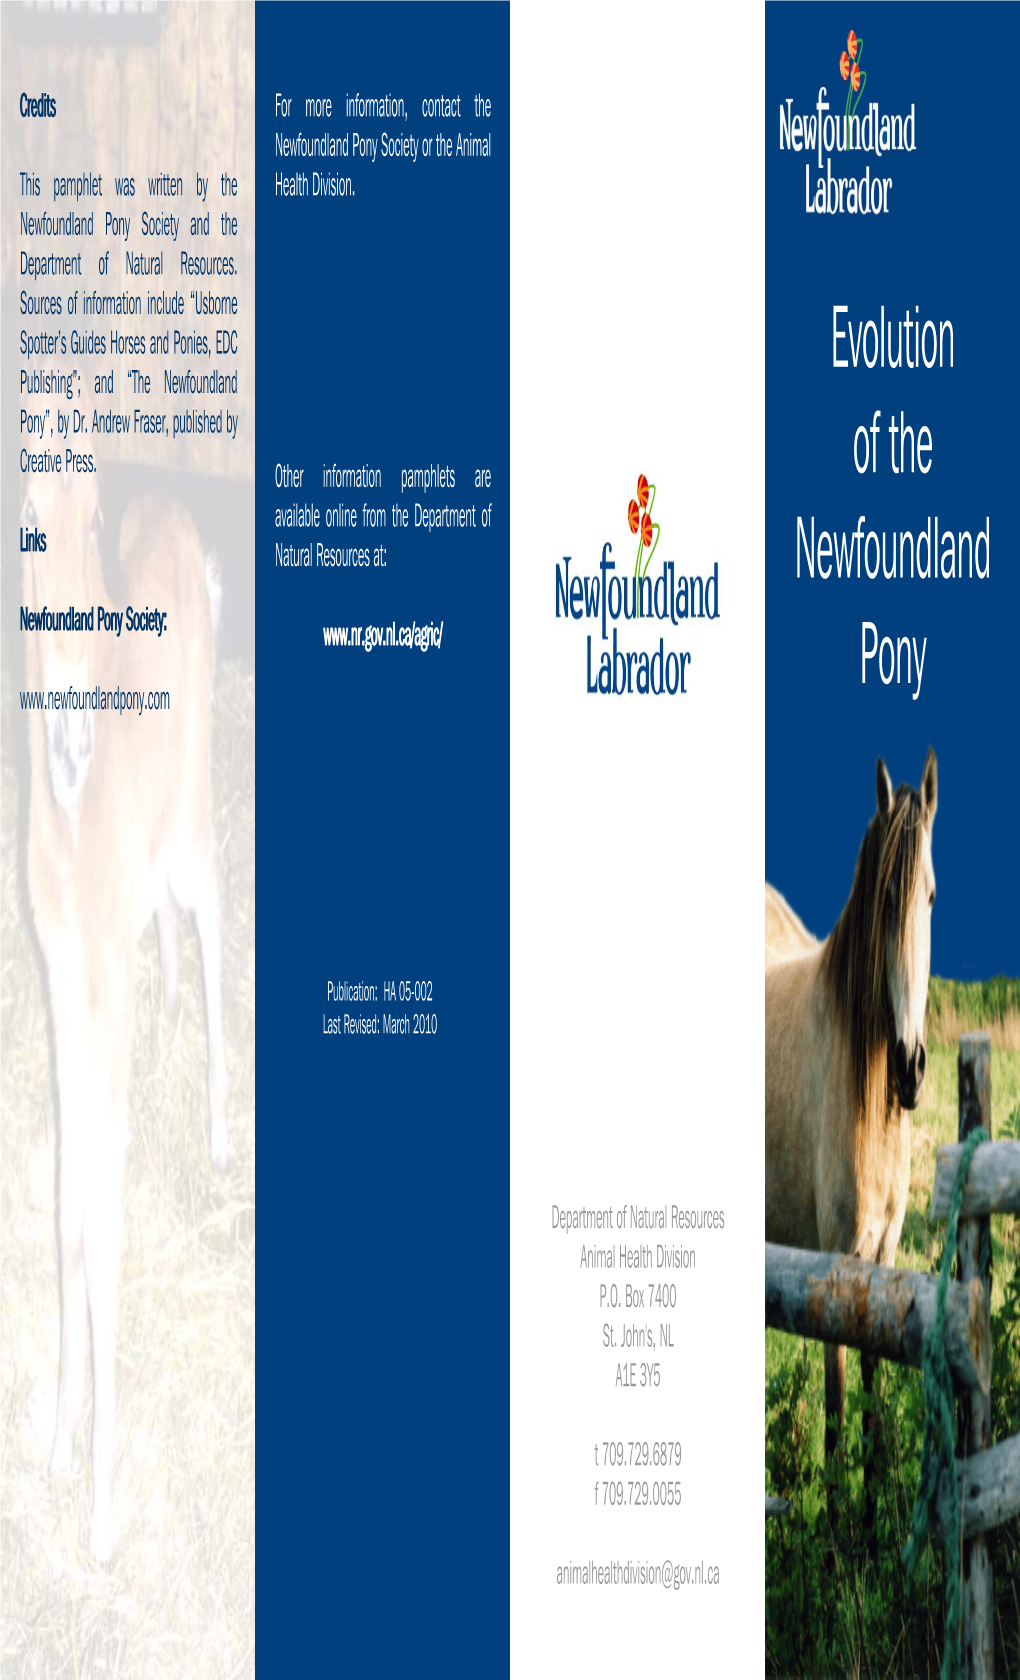 Evolution of the Newfoundland Pony